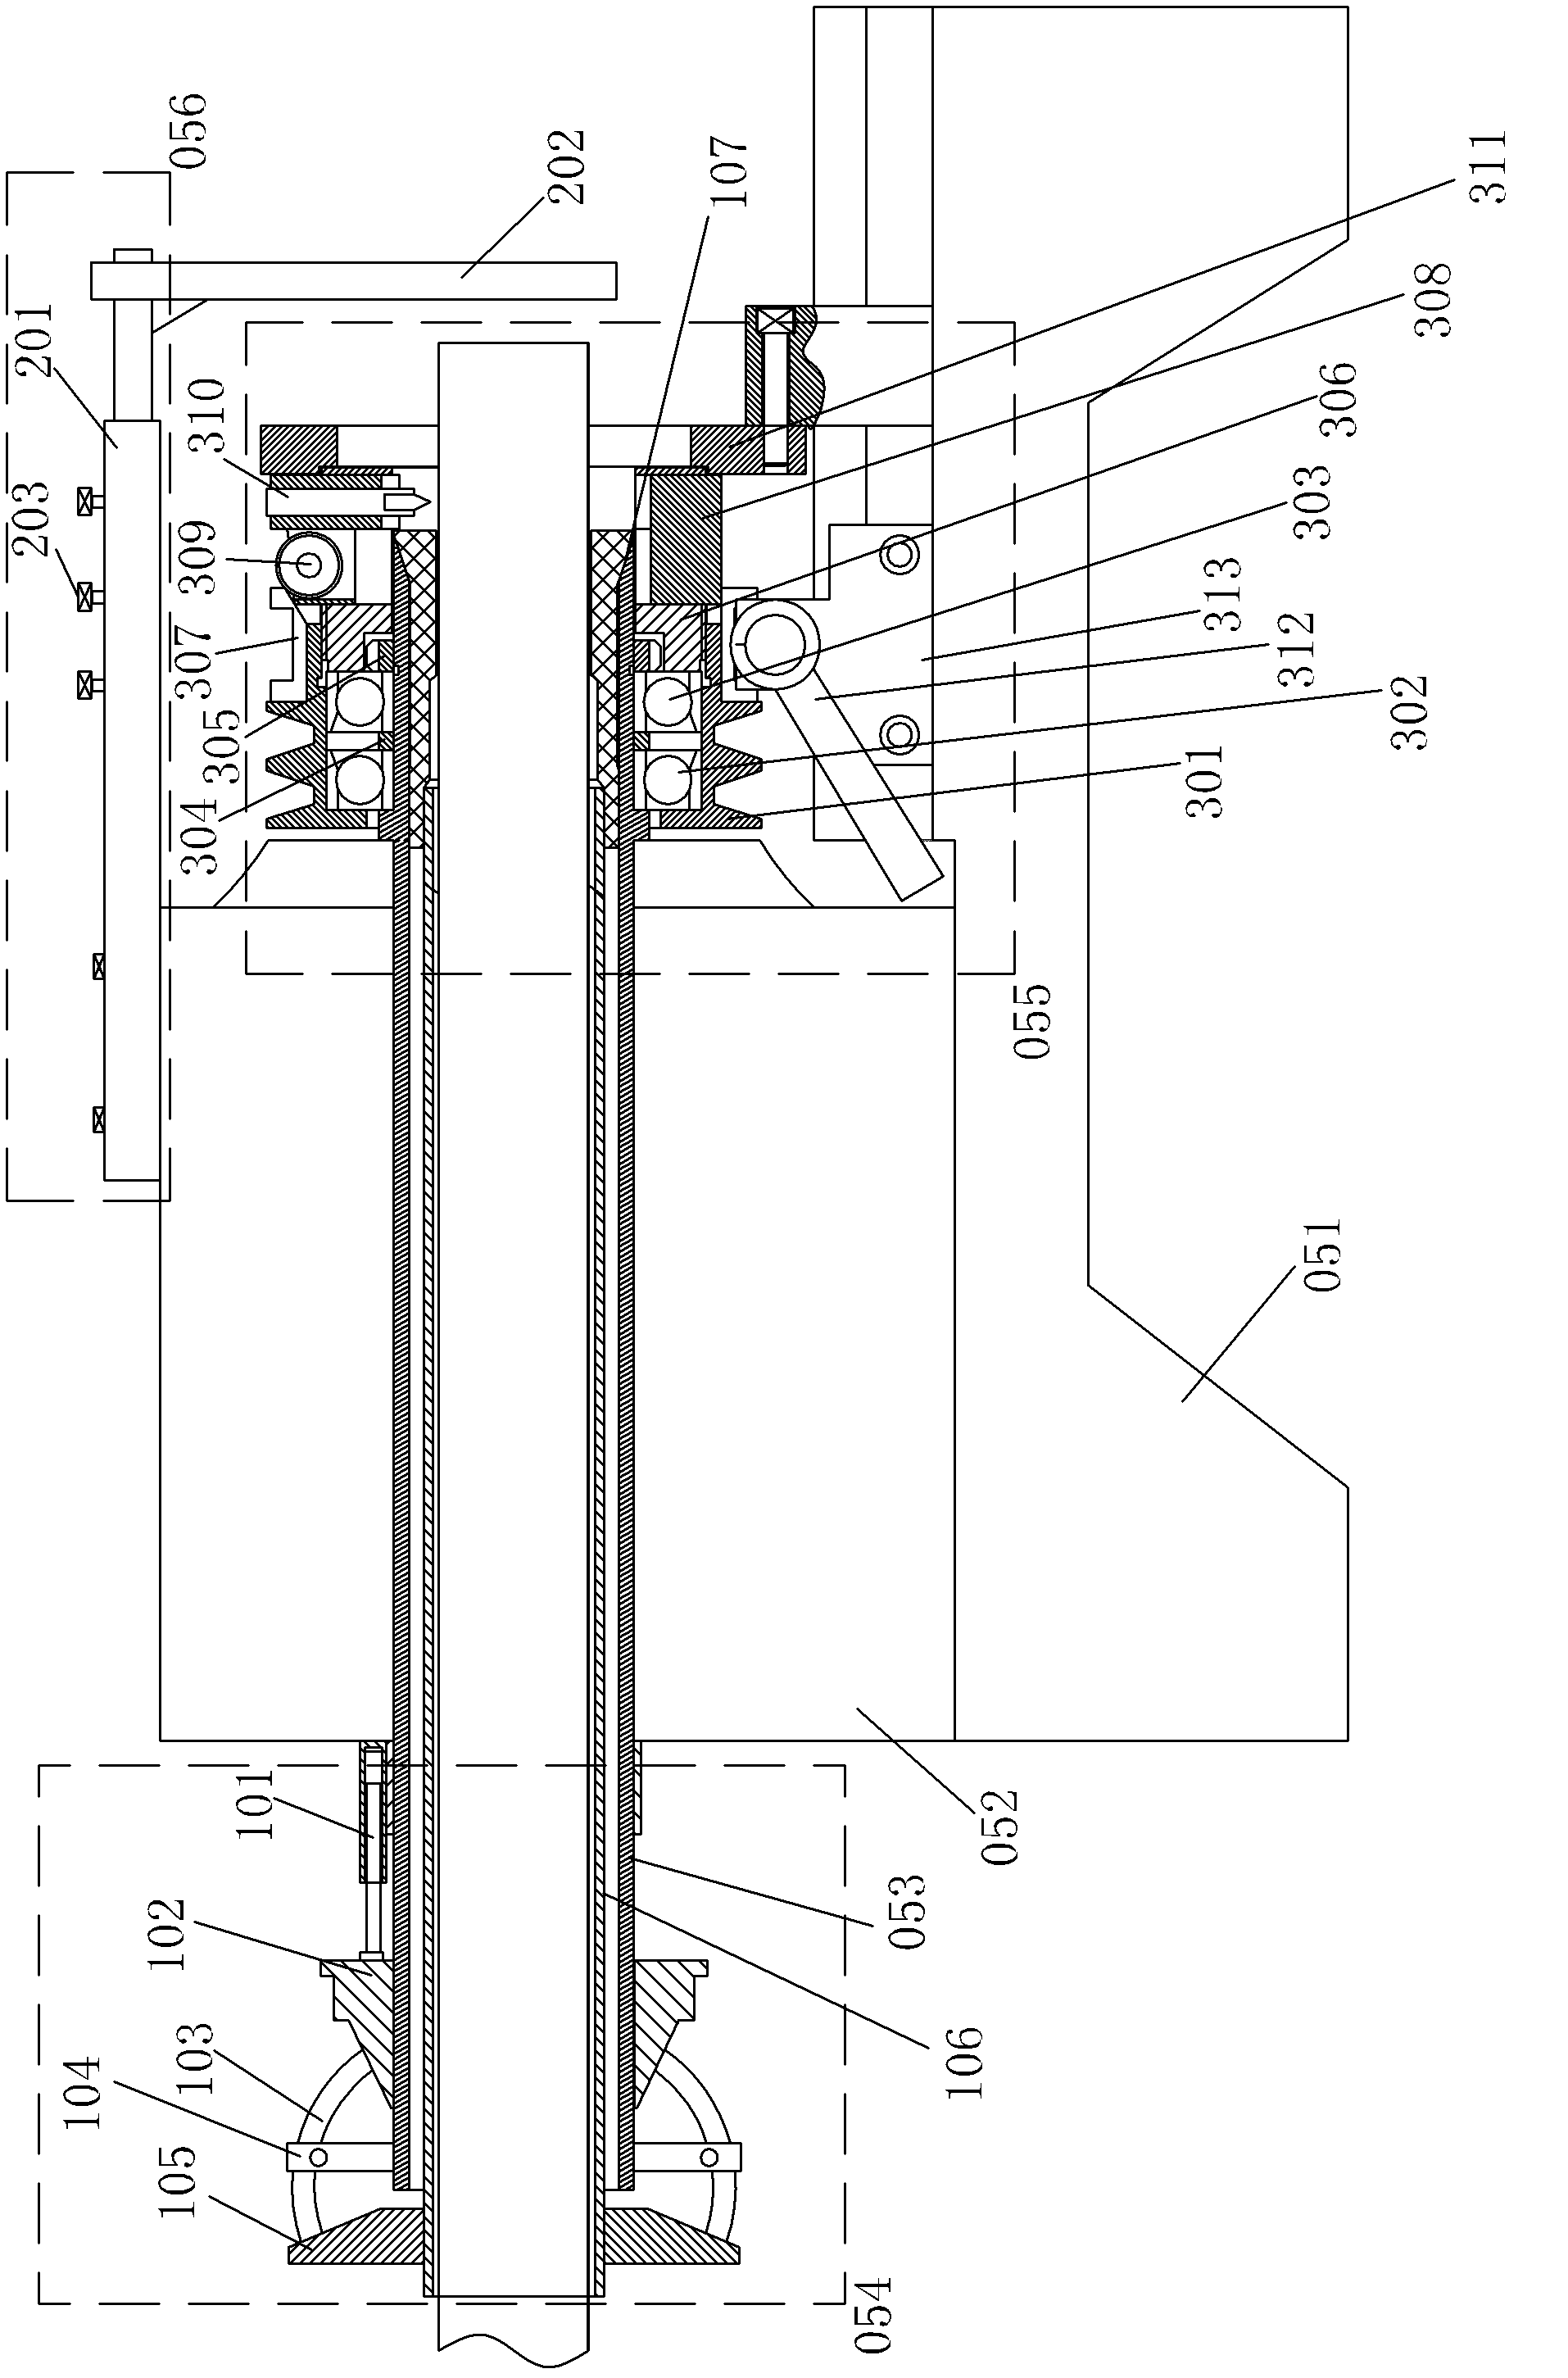 An automatic rotary cutting machine